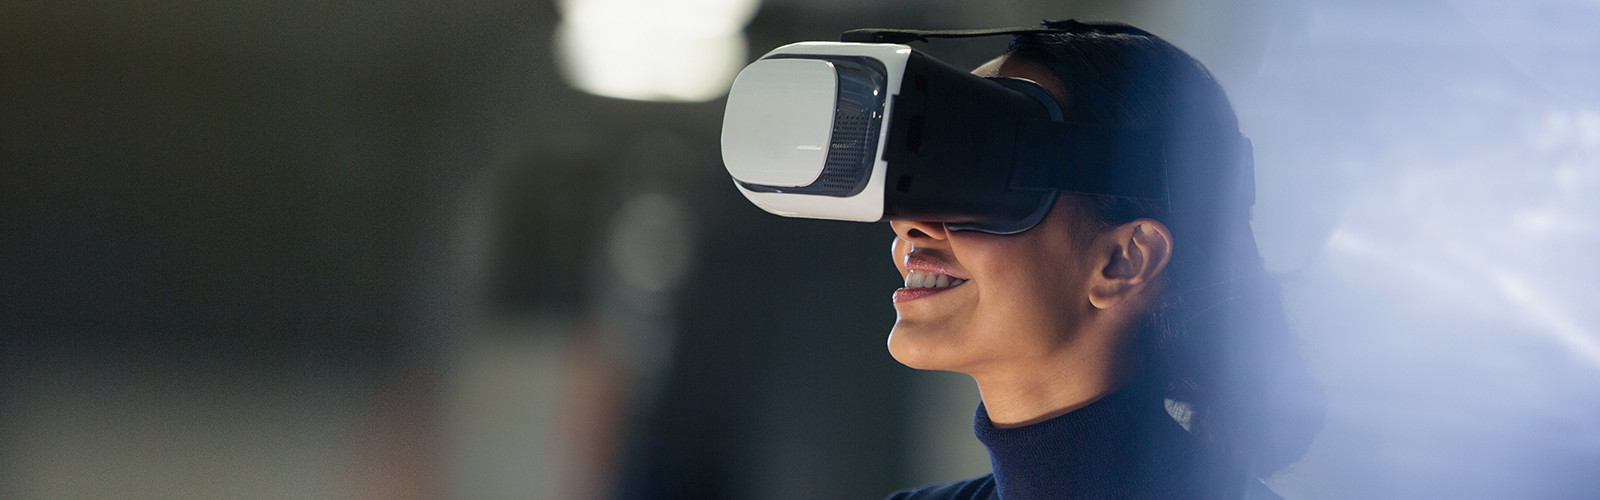 Girl wearing Virtual Reality headset